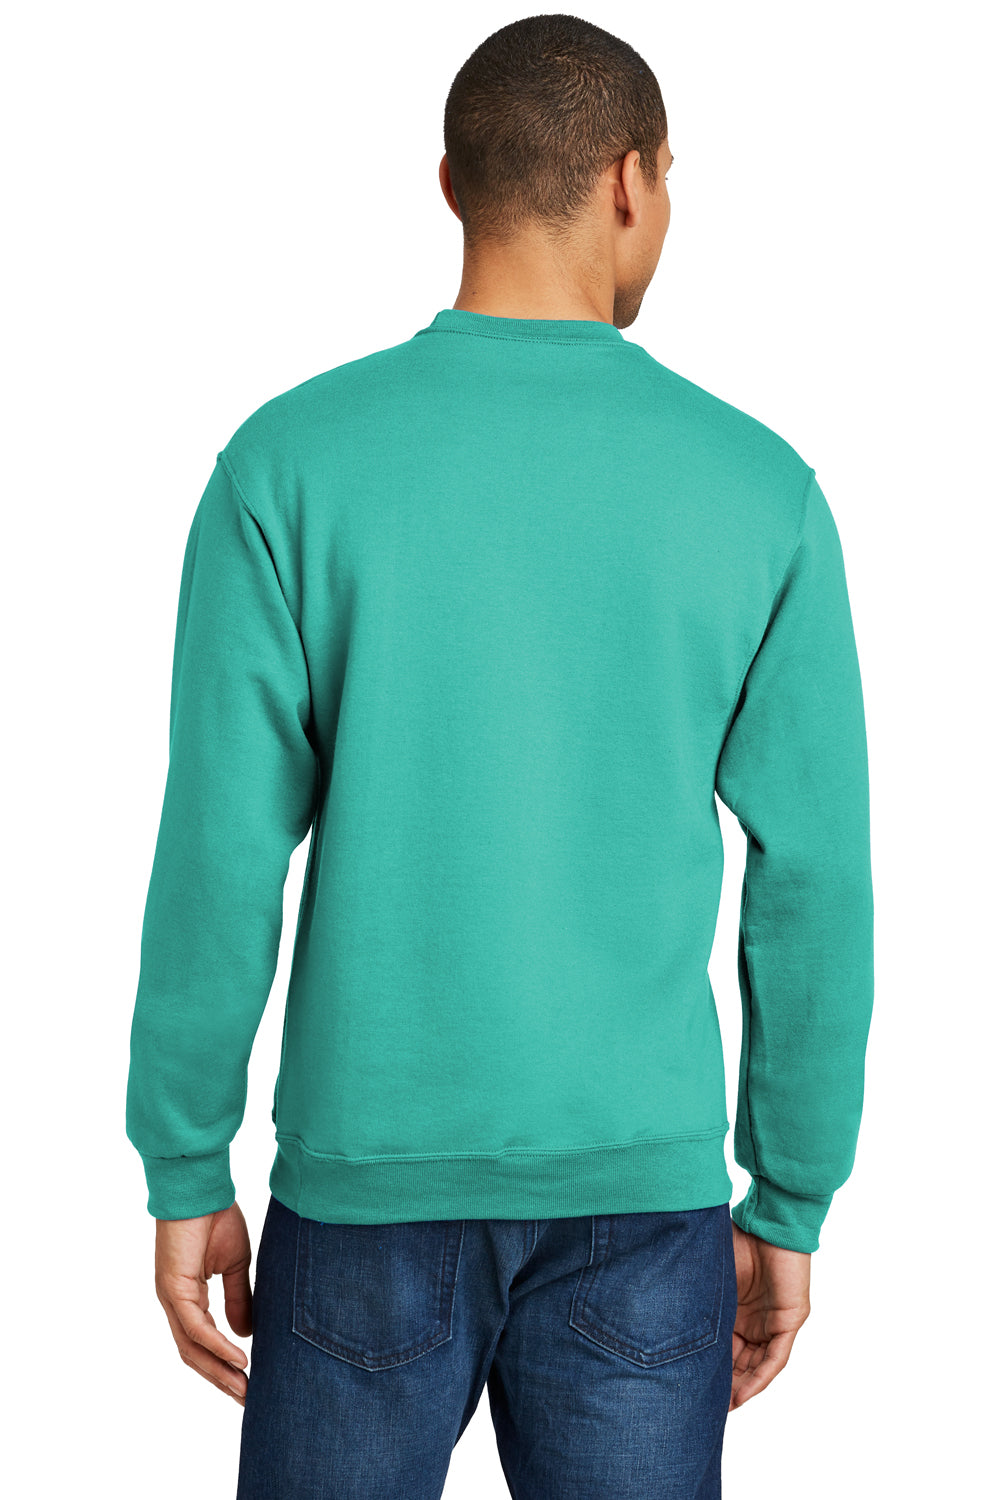 Jerzees 562M/562/562MR Mens NuBlend Fleece Crewneck Sweatshirt Cool Mint Back